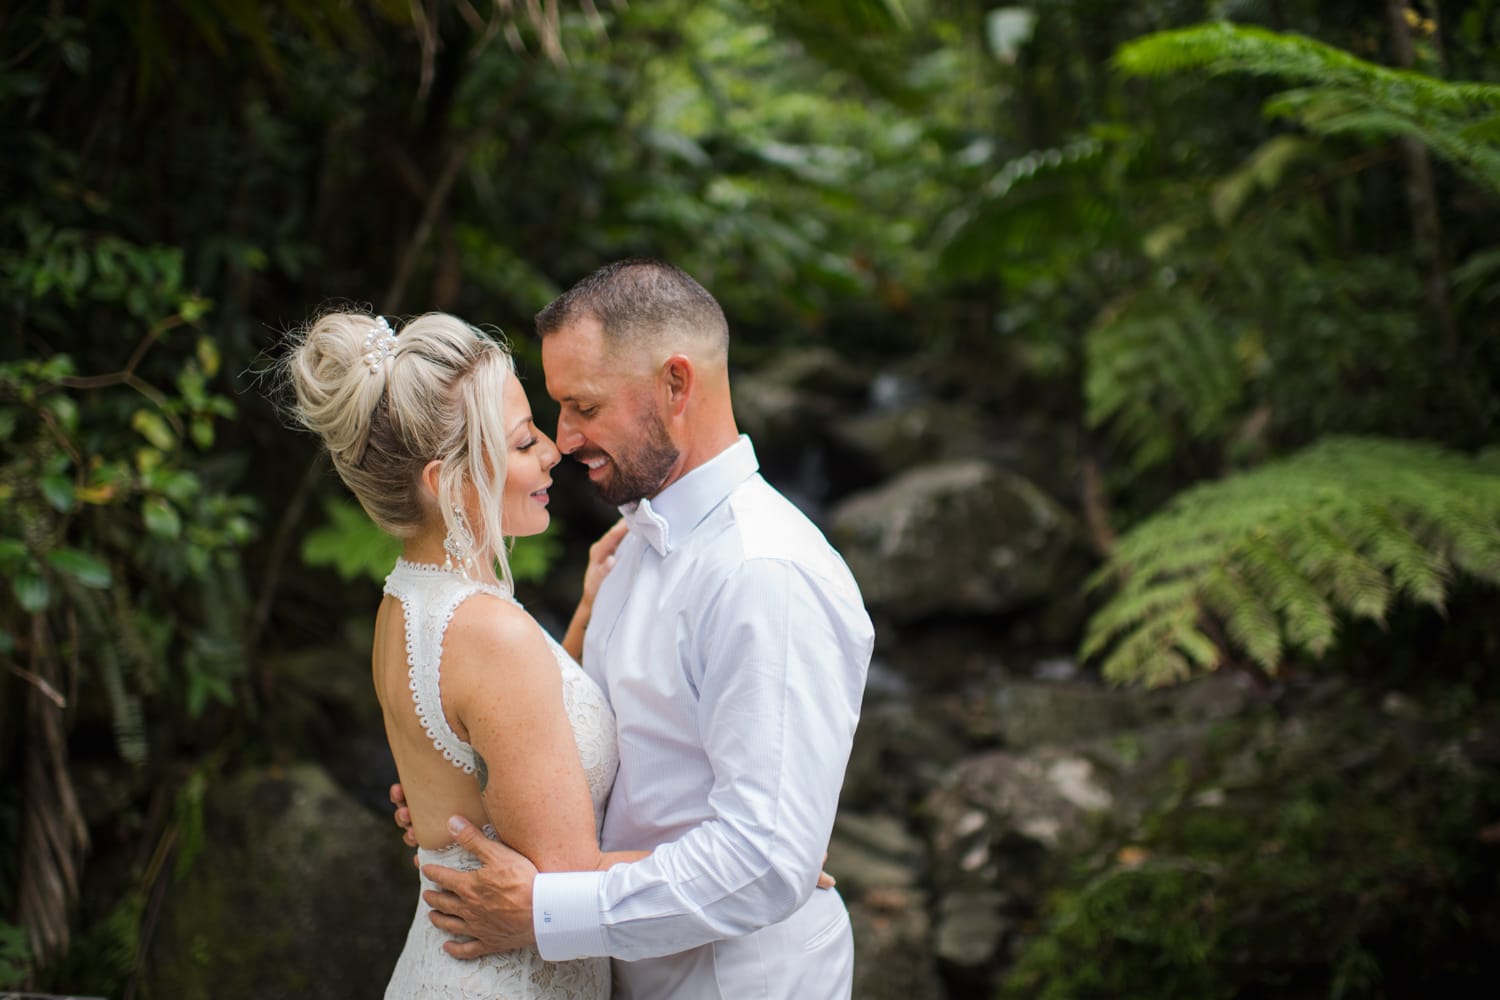 yunque-rainforest-puerto-rico-elopement-wedding-portraits-011.jpg